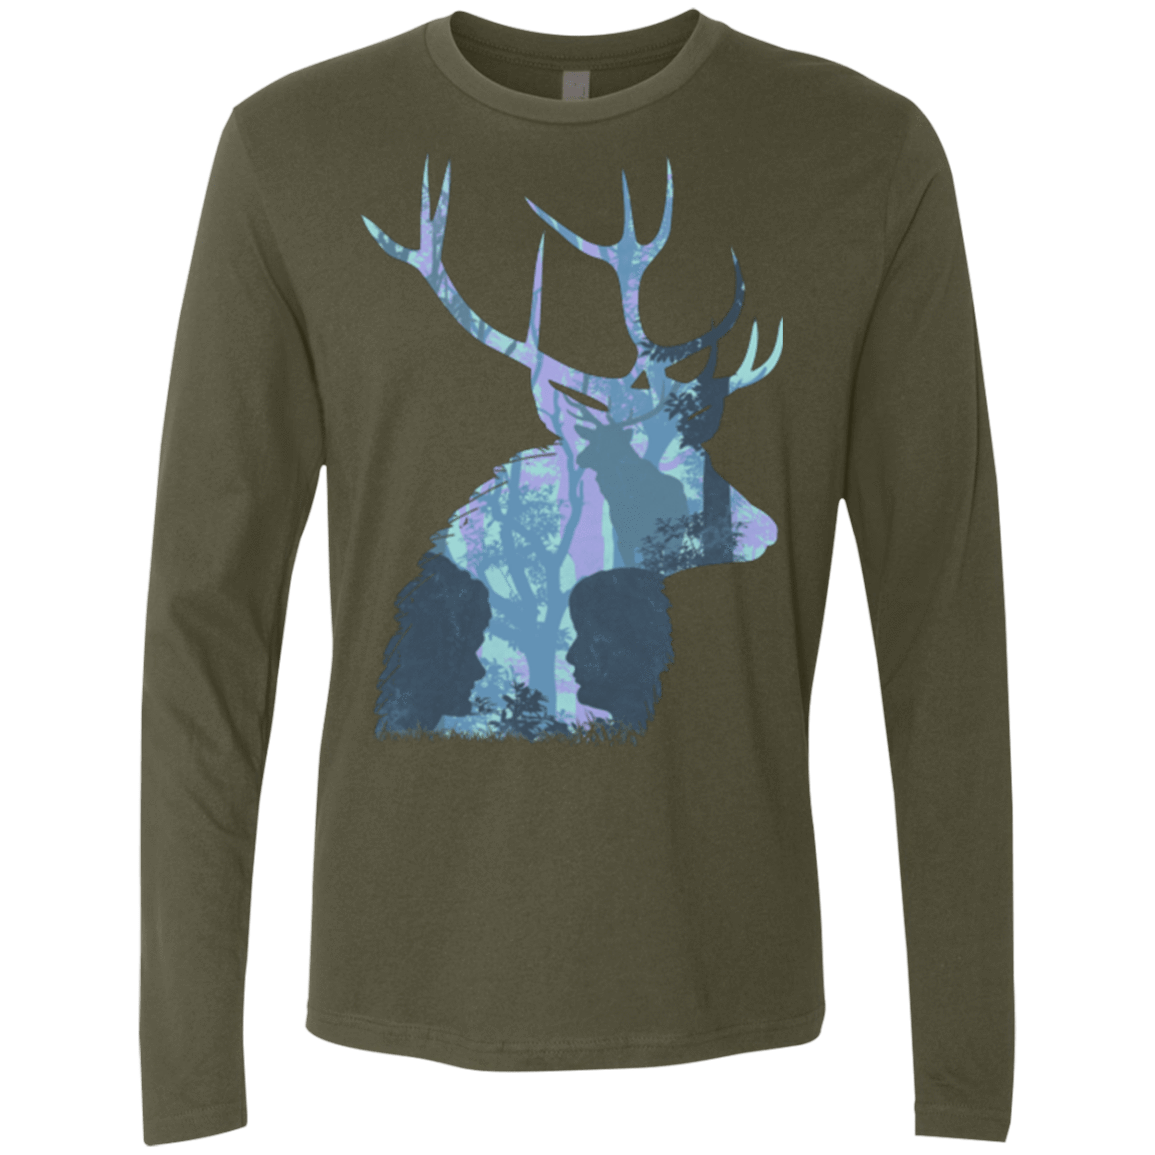 T-Shirts Military Green / Small Deer Cannibal Men's Premium Long Sleeve